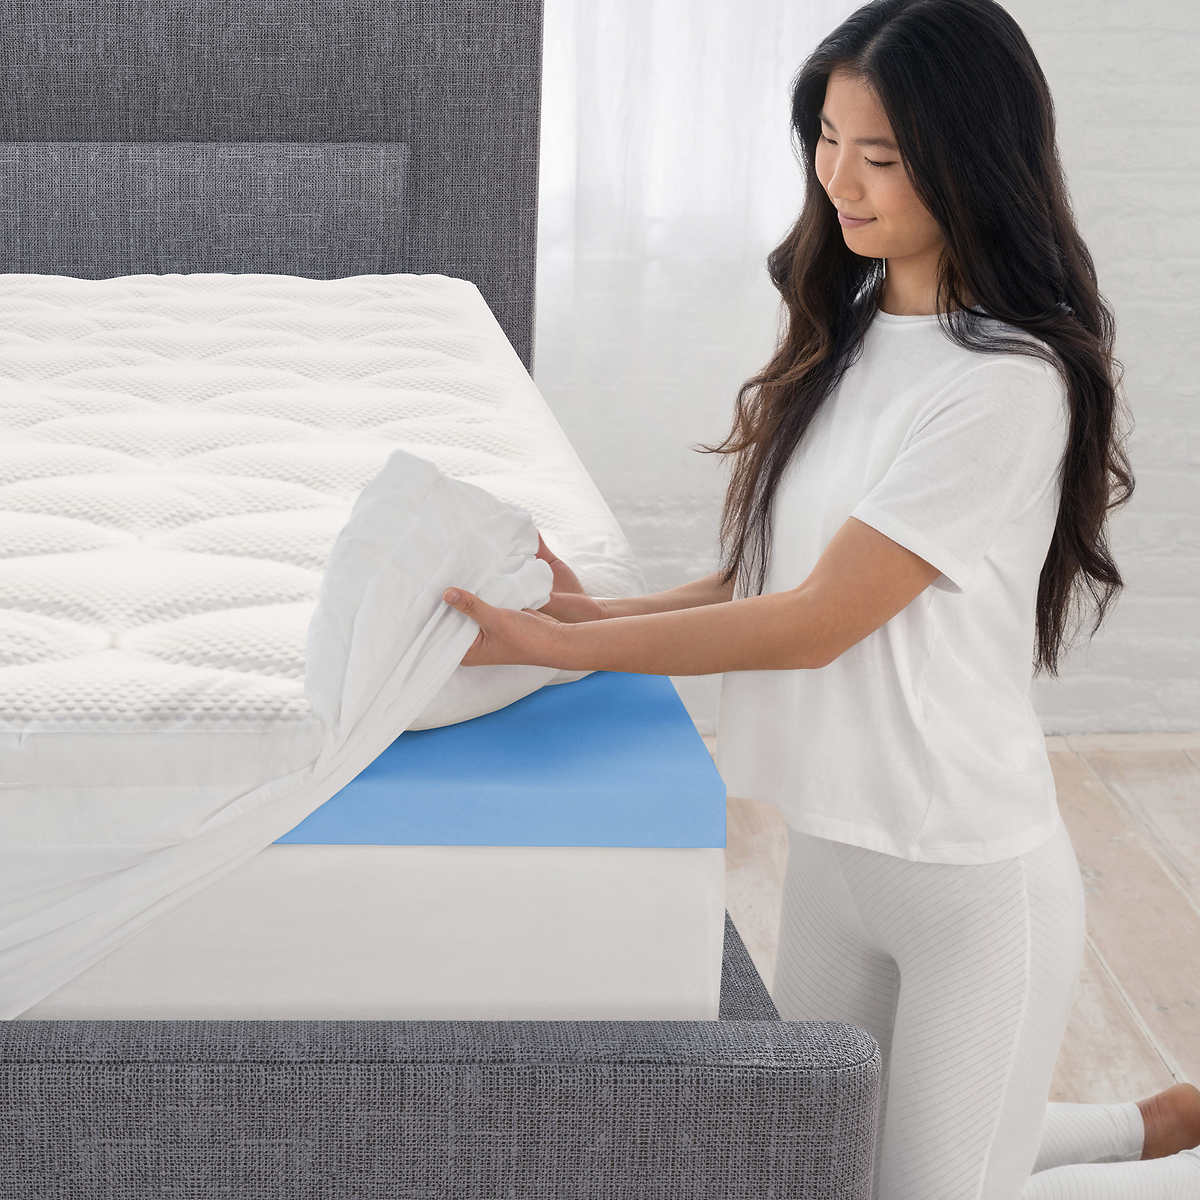 NEW - Costco - Novaform FULL Plush Pillowtop 4” Memory Foam Mattress Topper - Retail $159